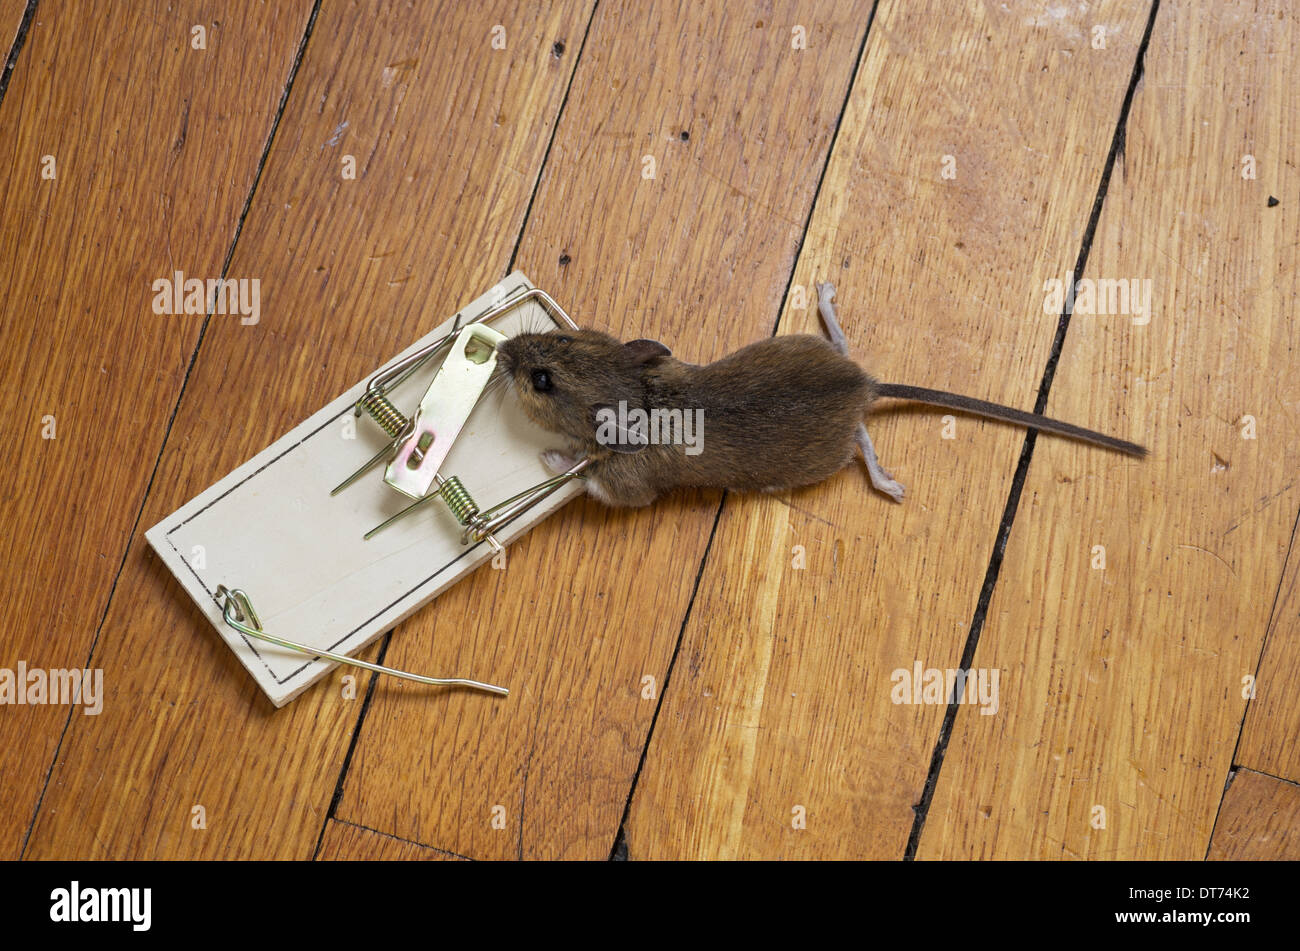 https://c8.alamy.com/comp/DT74K2/dead-mouse-caught-in-a-trap-on-a-wood-floor-DT74K2.jpg